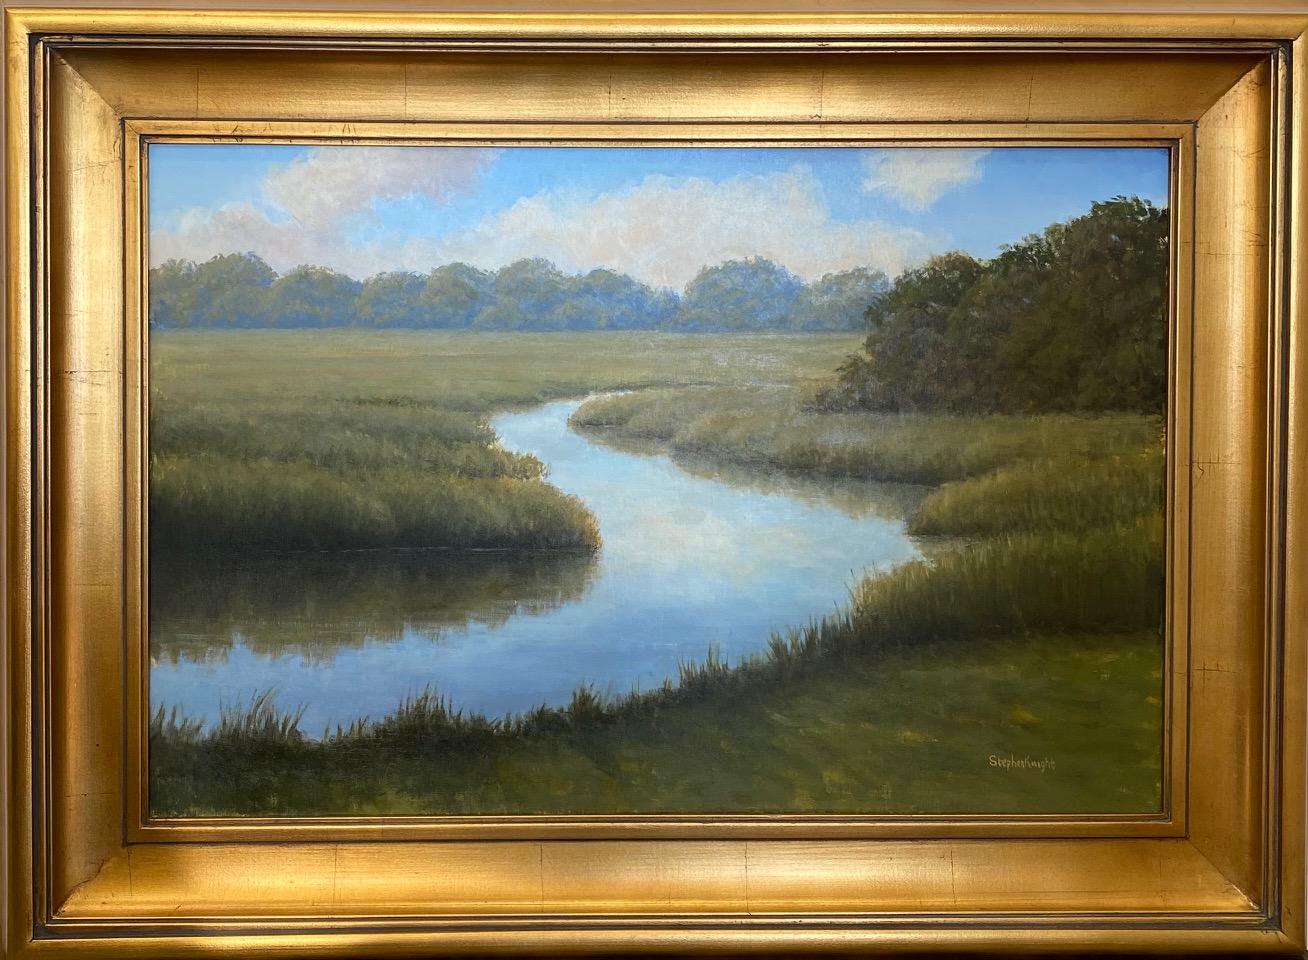 Stephen Knight Landscape Painting - Early Morning Peace, original 20x30 impressionist marine landscape